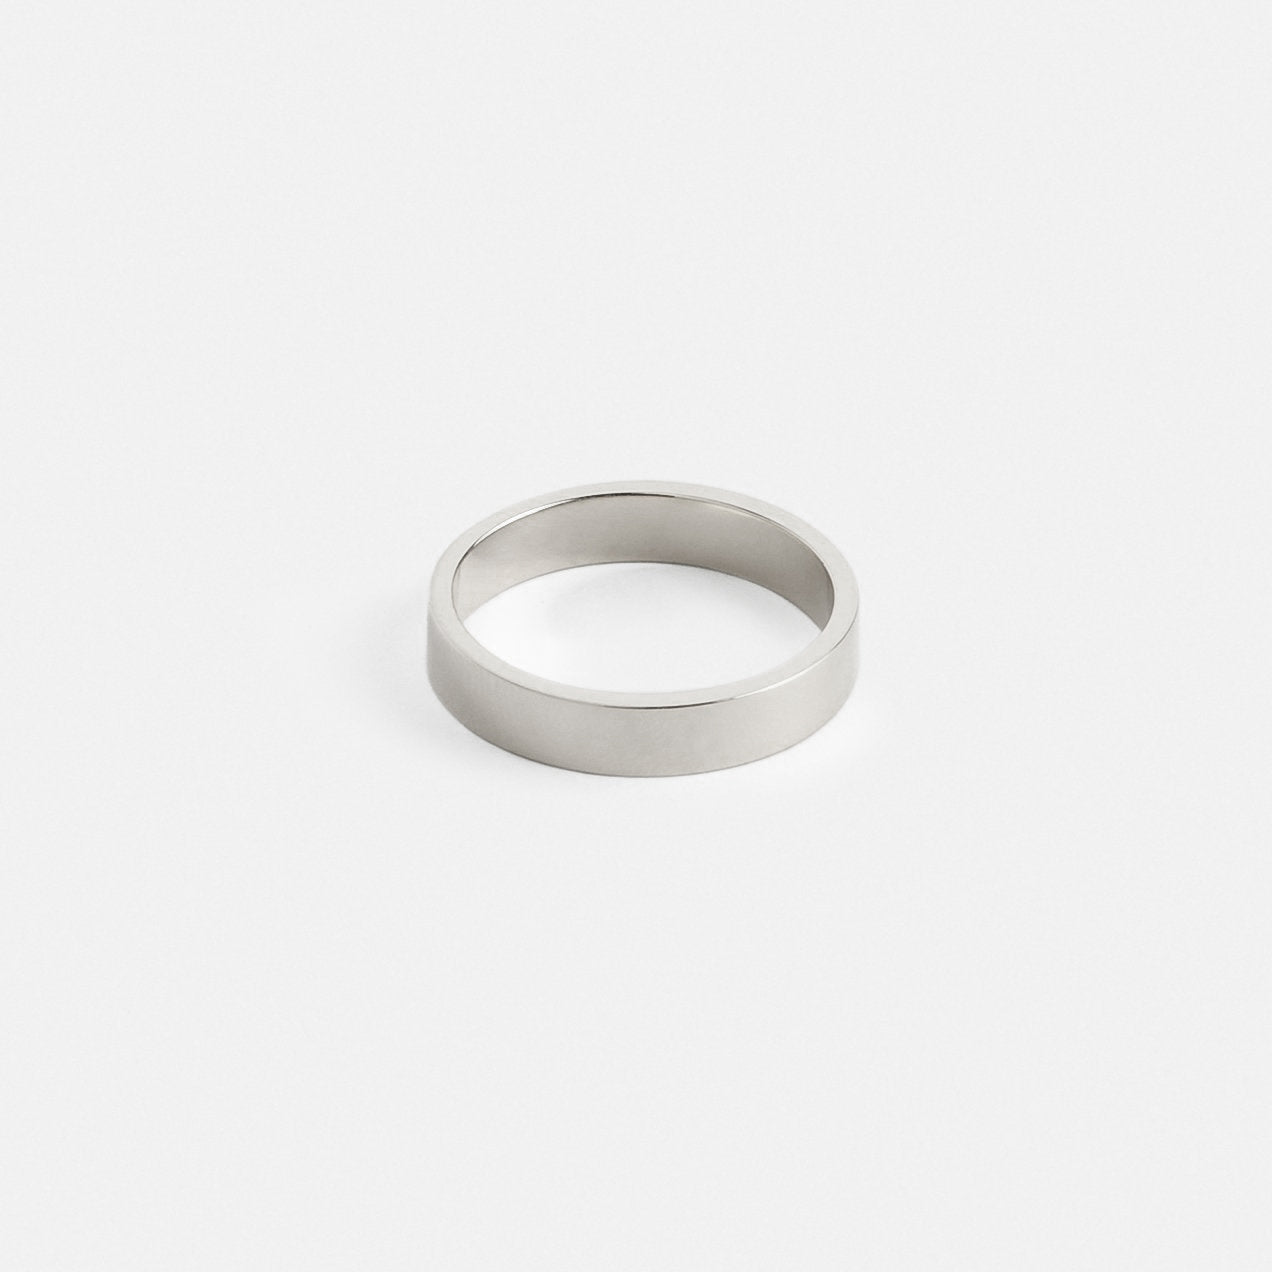 Eldo Handmade Ring in 14k White Gold By SHW Fine Jewelry NYC